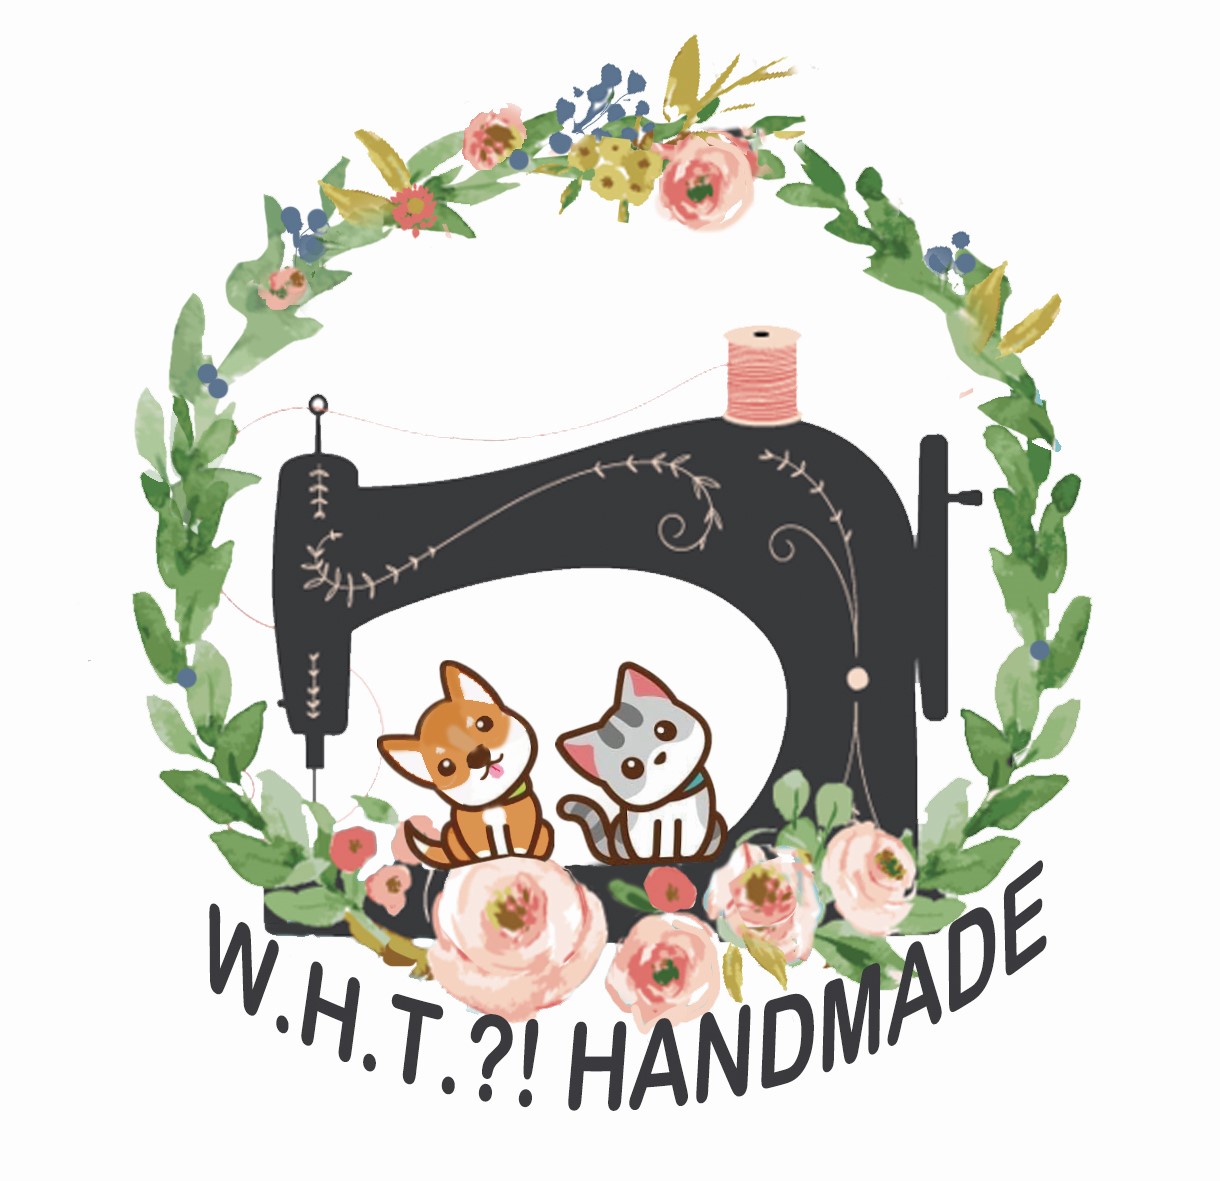 w.h.t.handmade